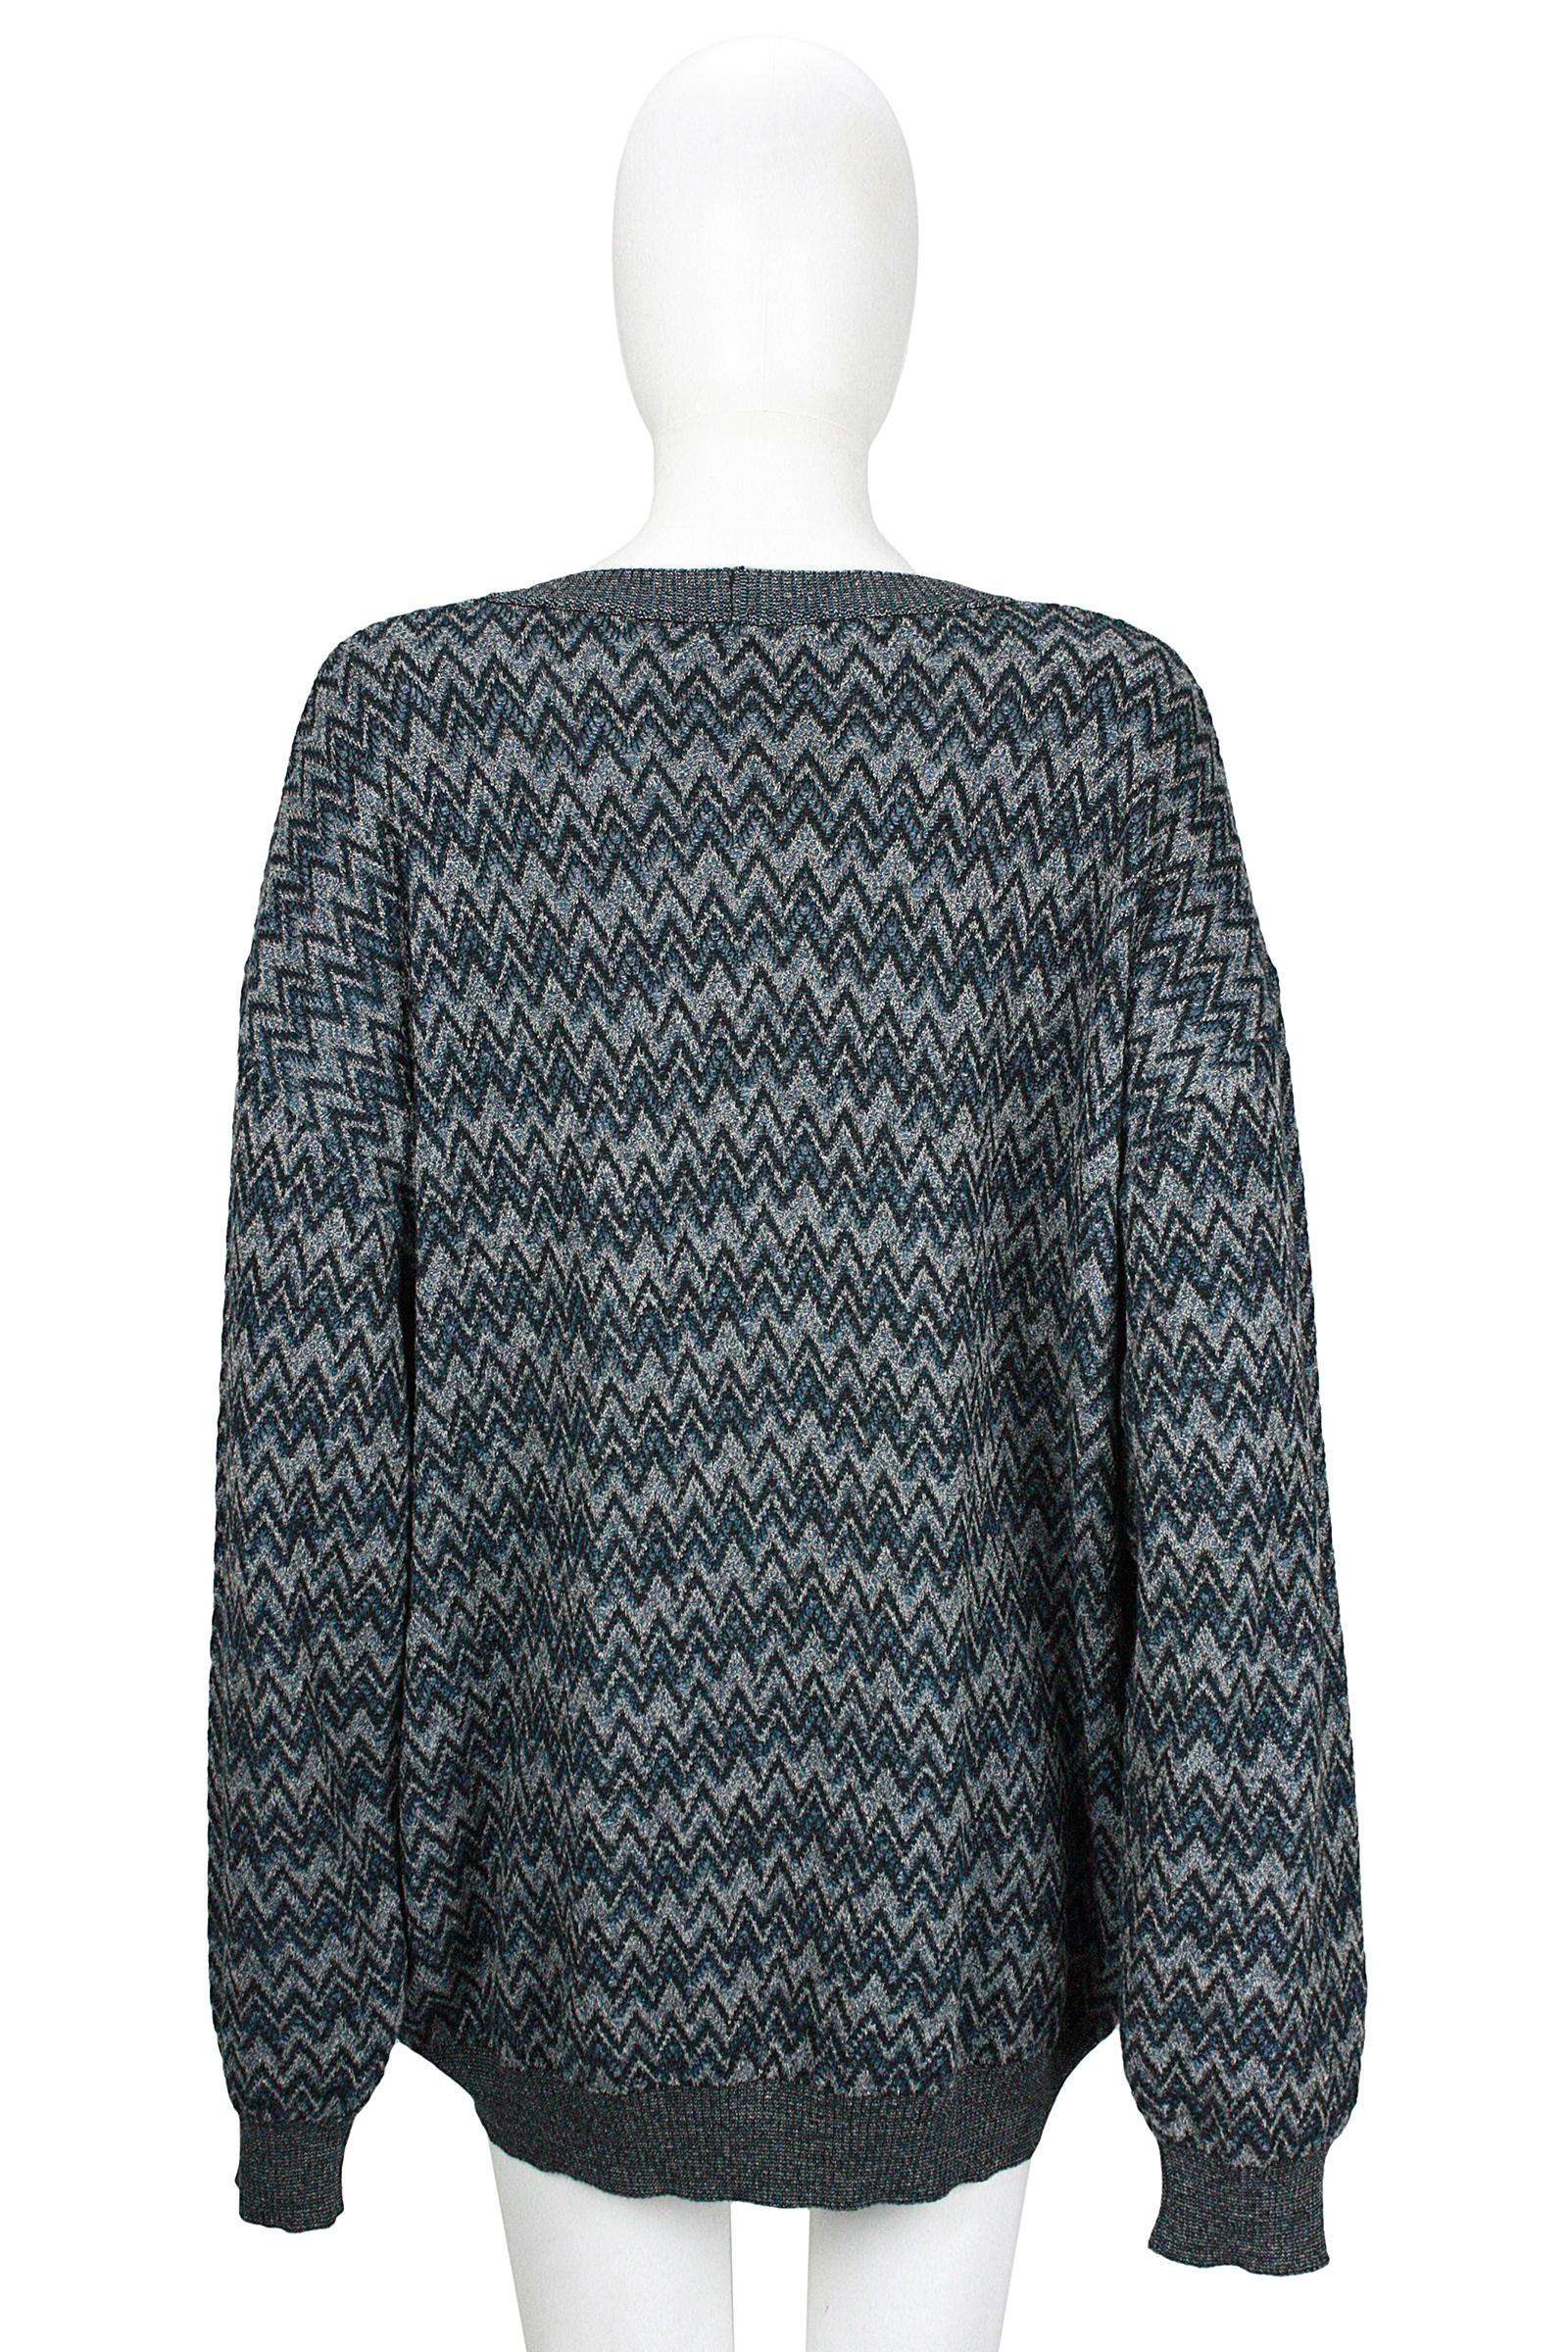 Missoni Blue Black Grey Zigzag Chevron Sweater 1